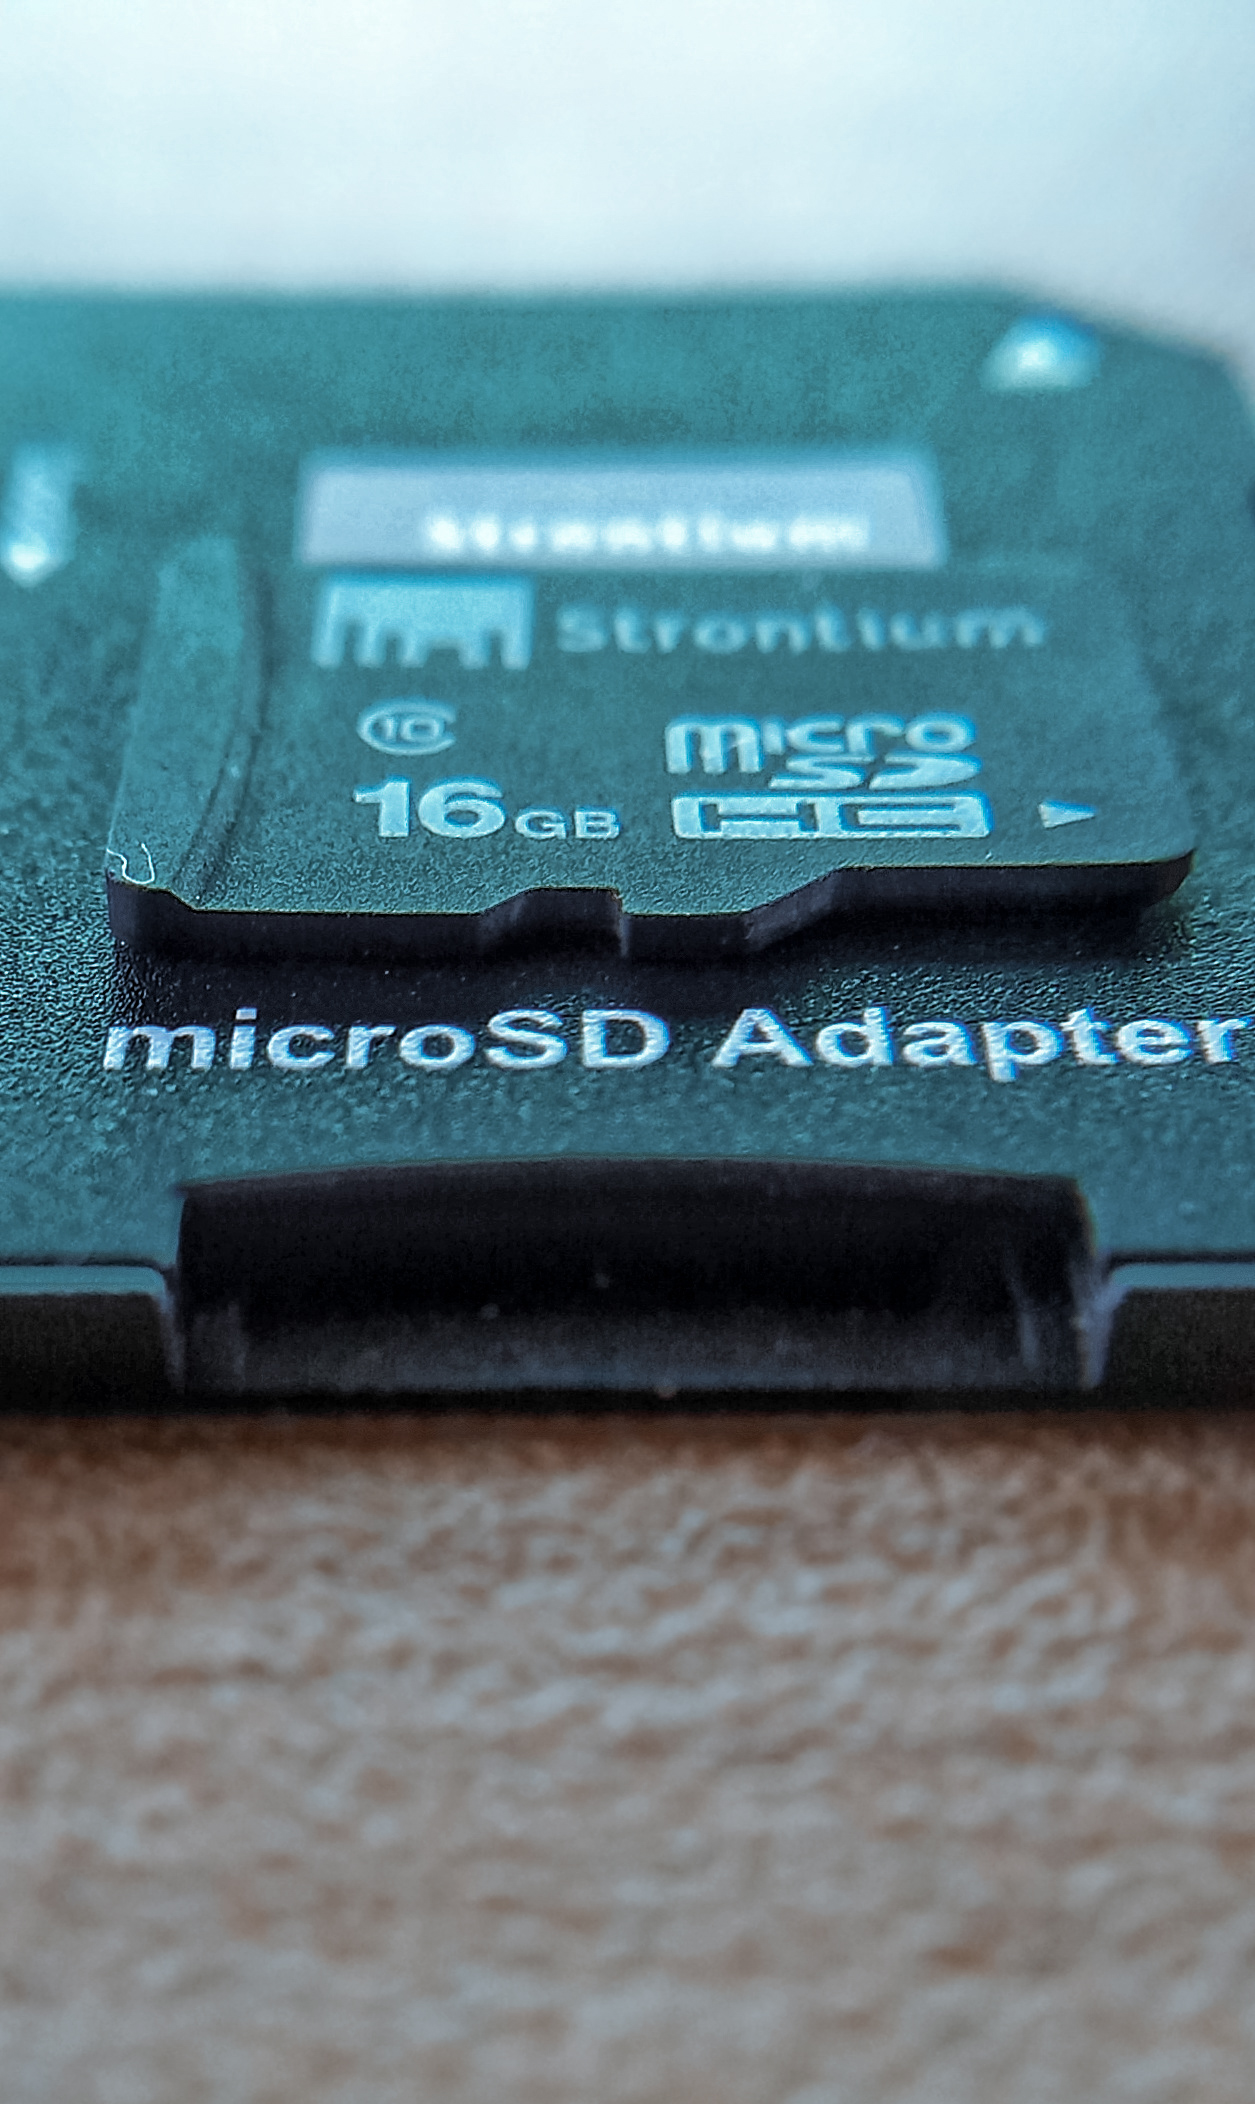 Micro sd adapter